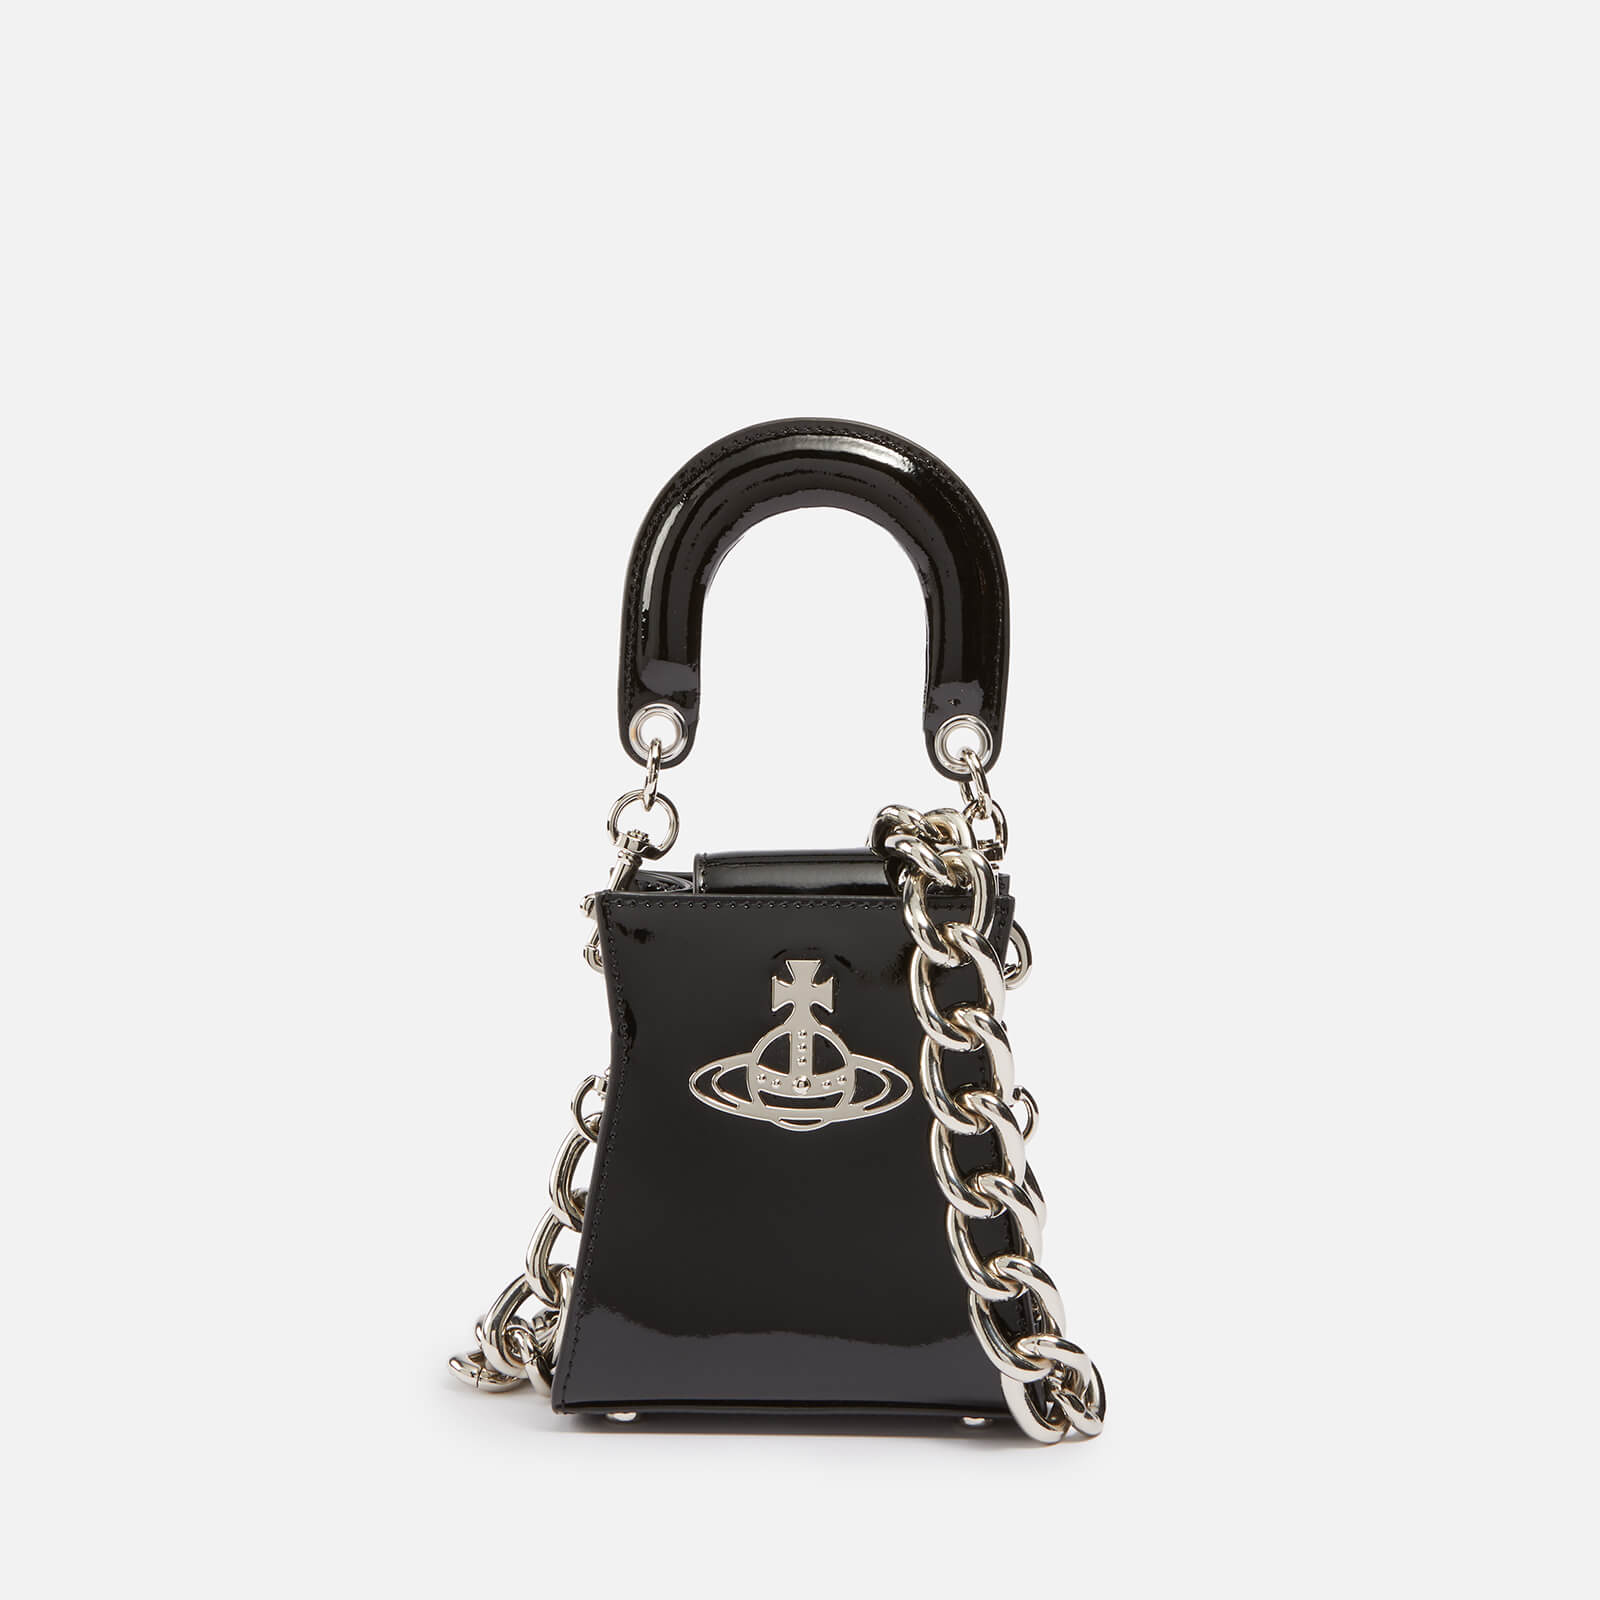 Vivienne Westwood Women's Kelly Small Handbag - Black product